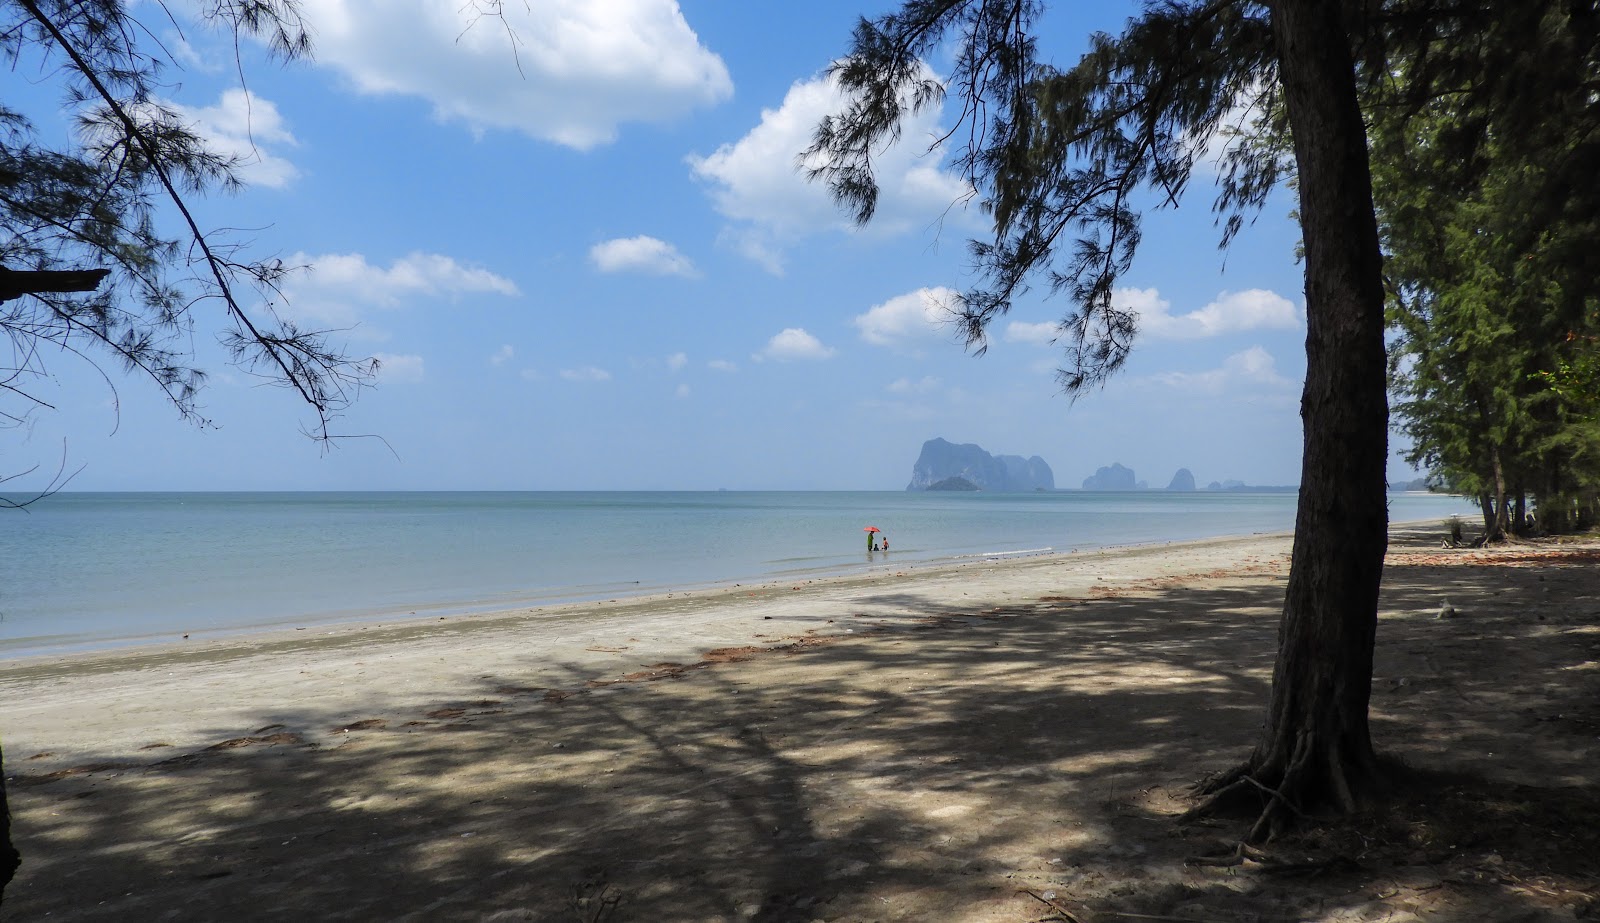 Chang Lang Beach'in fotoğrafı geniş plaj ile birlikte